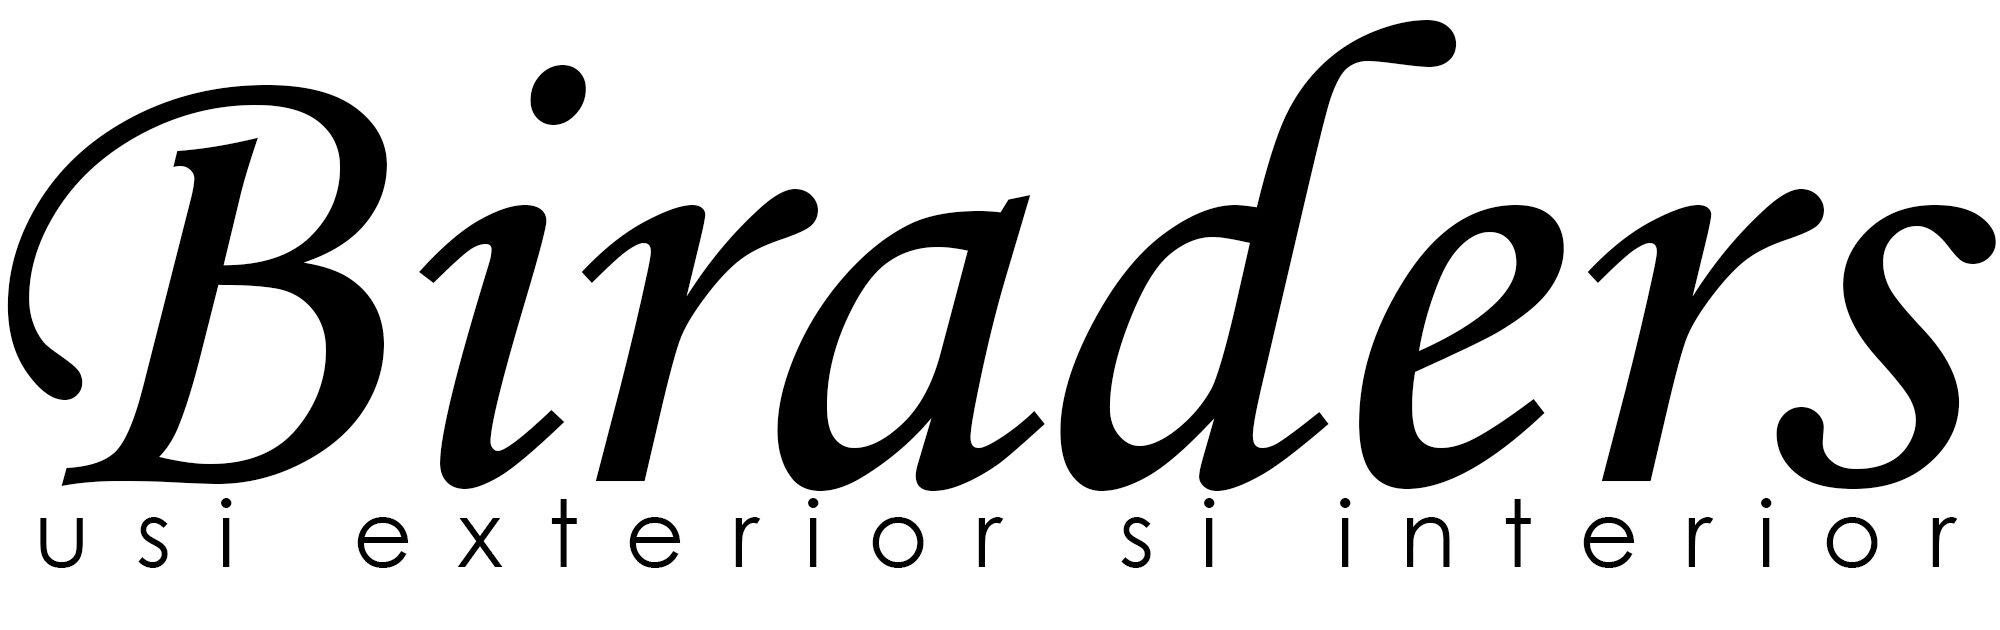 лого Biraders